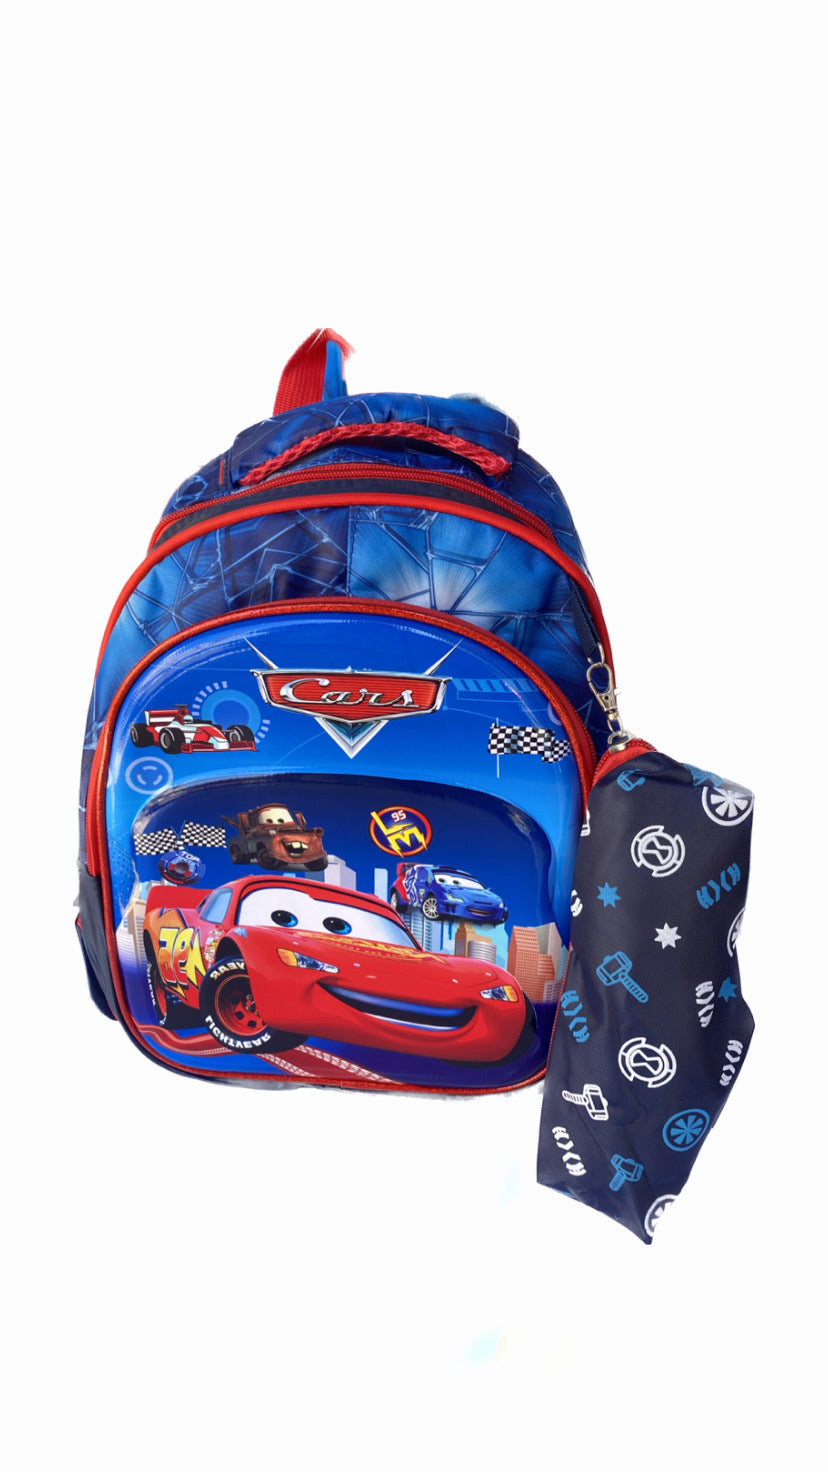 School Bag Size 13